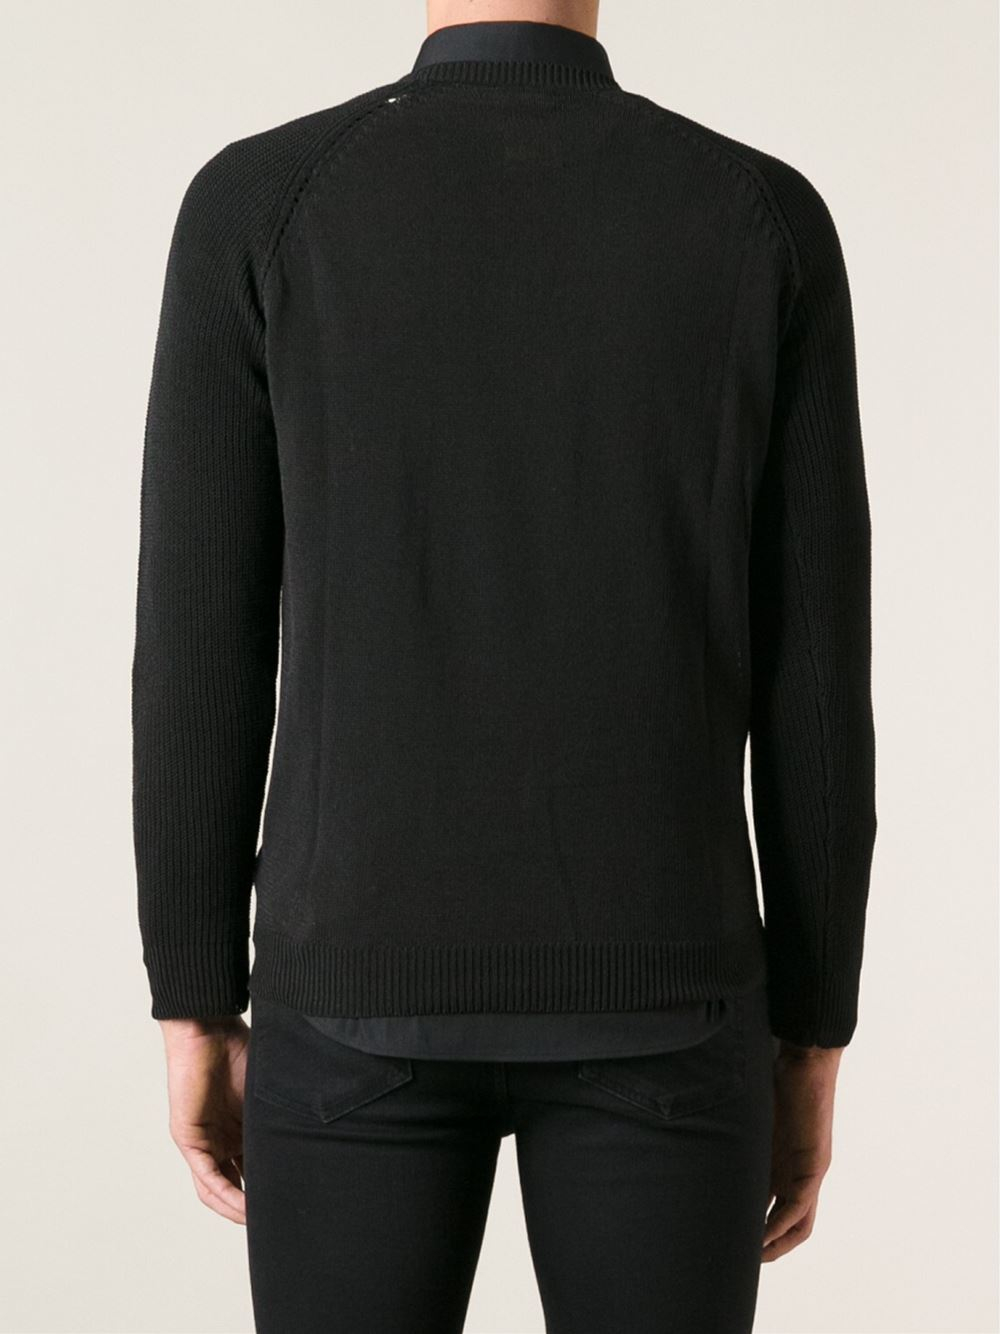 Lyst - DIESEL Sheer Woven Sweater in Black for Men